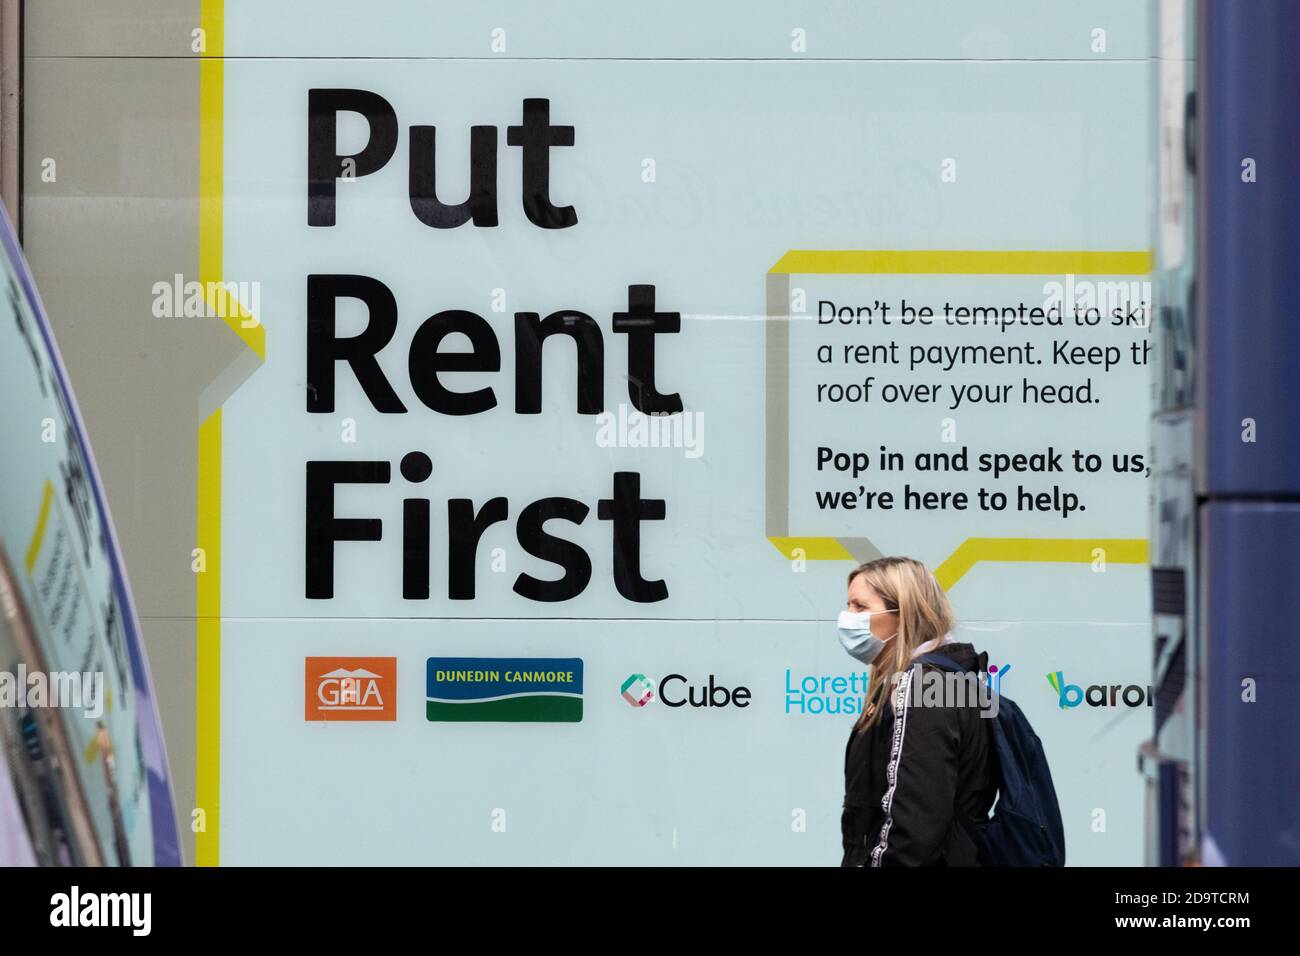 Put Rent First sign, Glasgow city centre, Scotland, UK Stock Photo